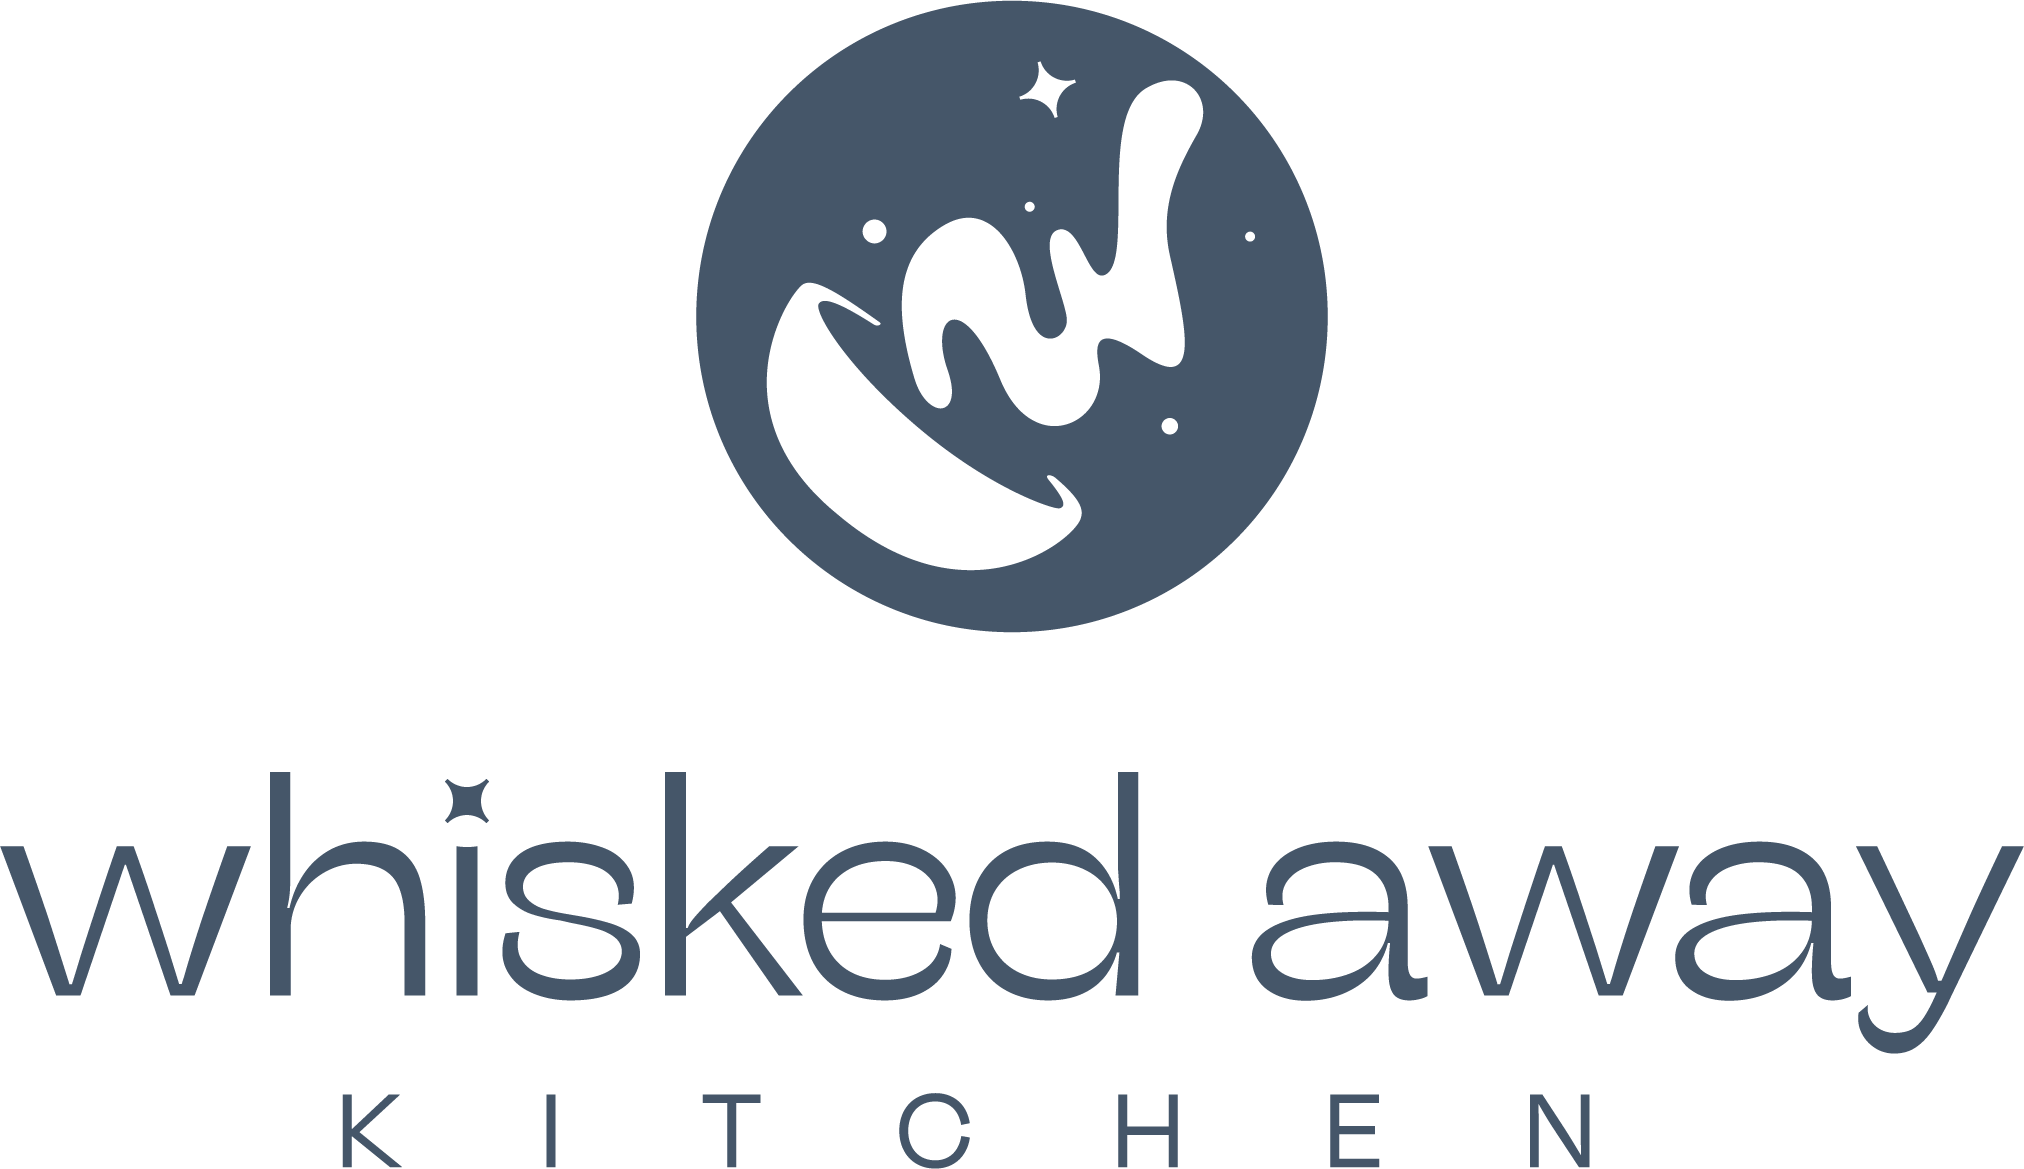 Vertical Whisked Away Kitchen Logo